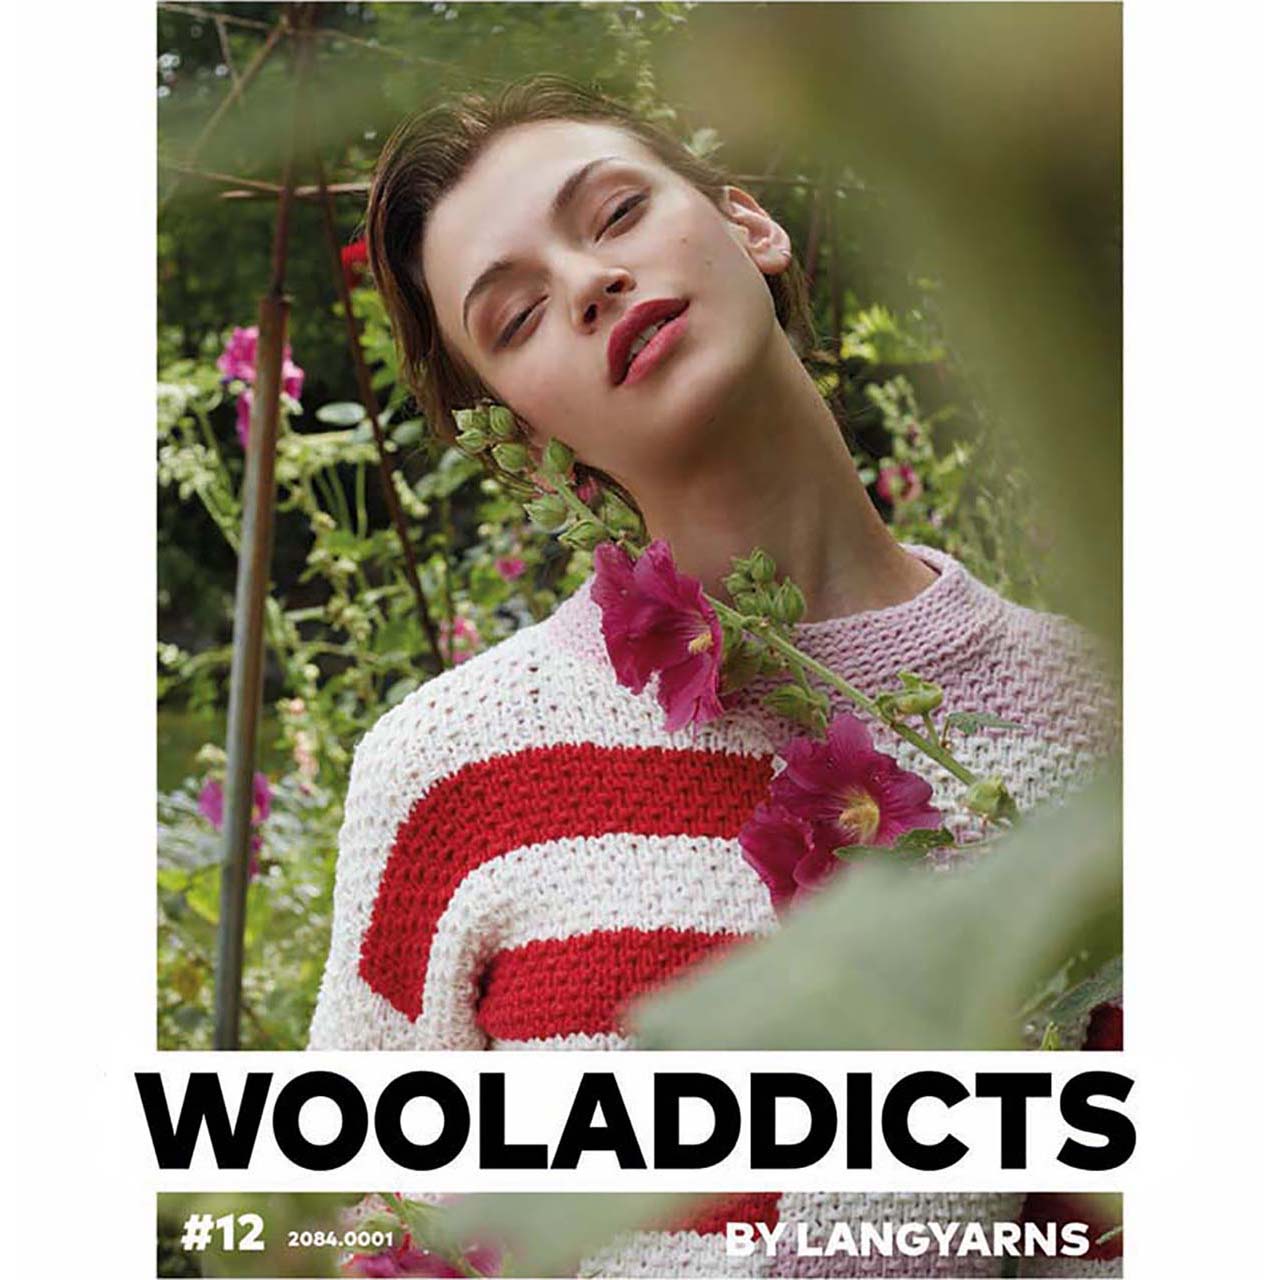 Magazin Wooladdicts No 12 - Cover